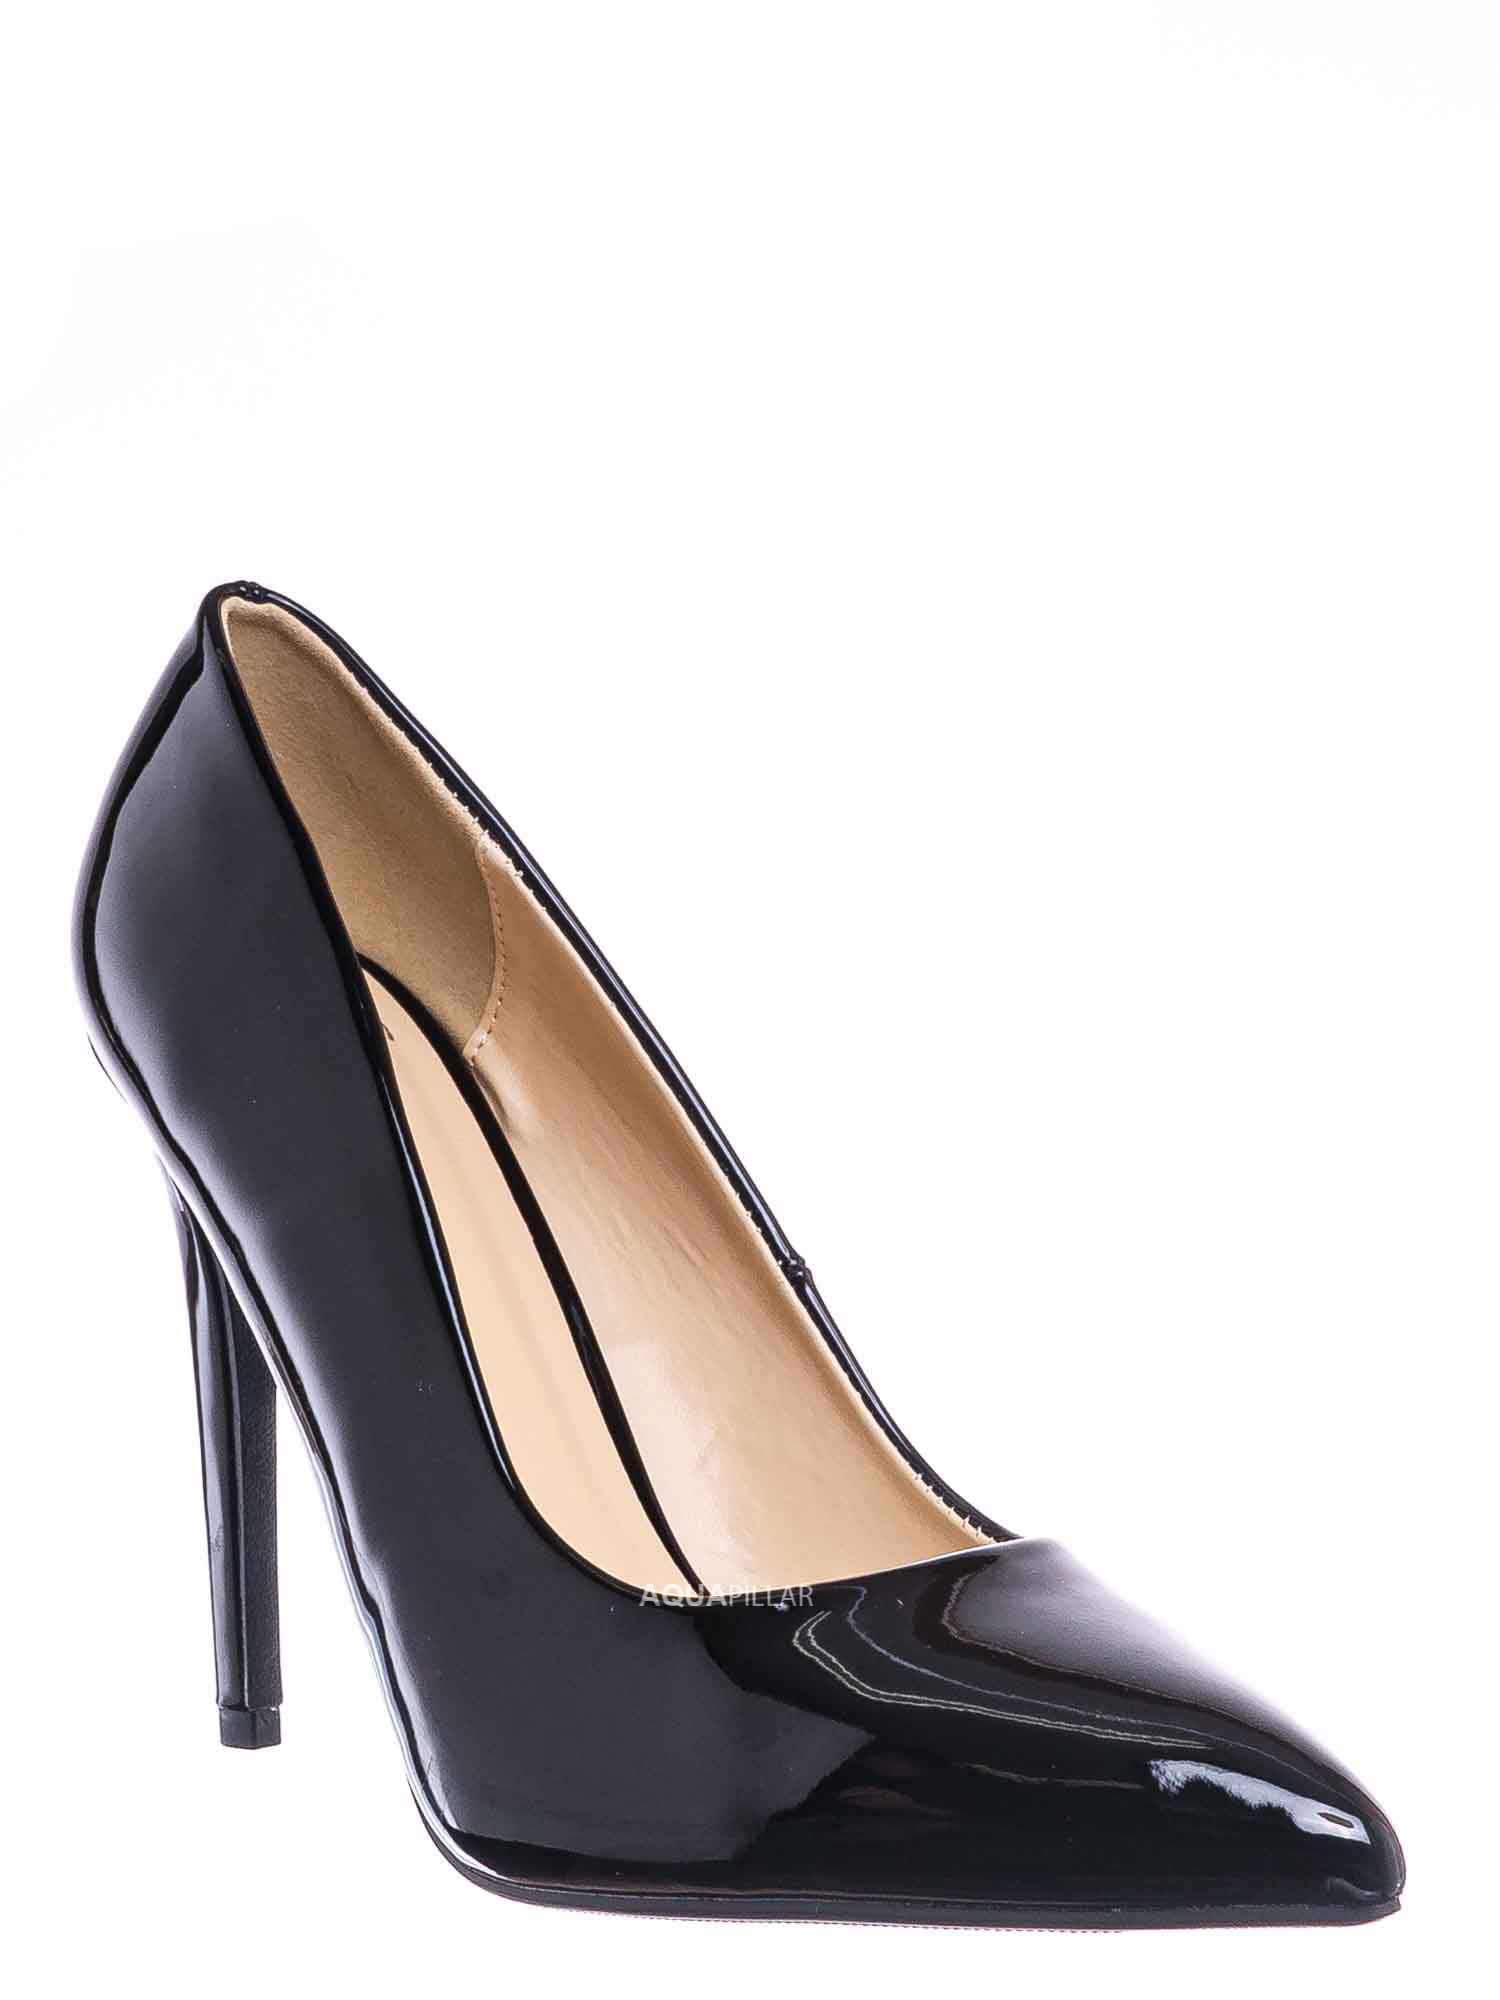 Classic Pointed Toe Dress Pump - Women's High Heel Stiletto Dress Shoes ...